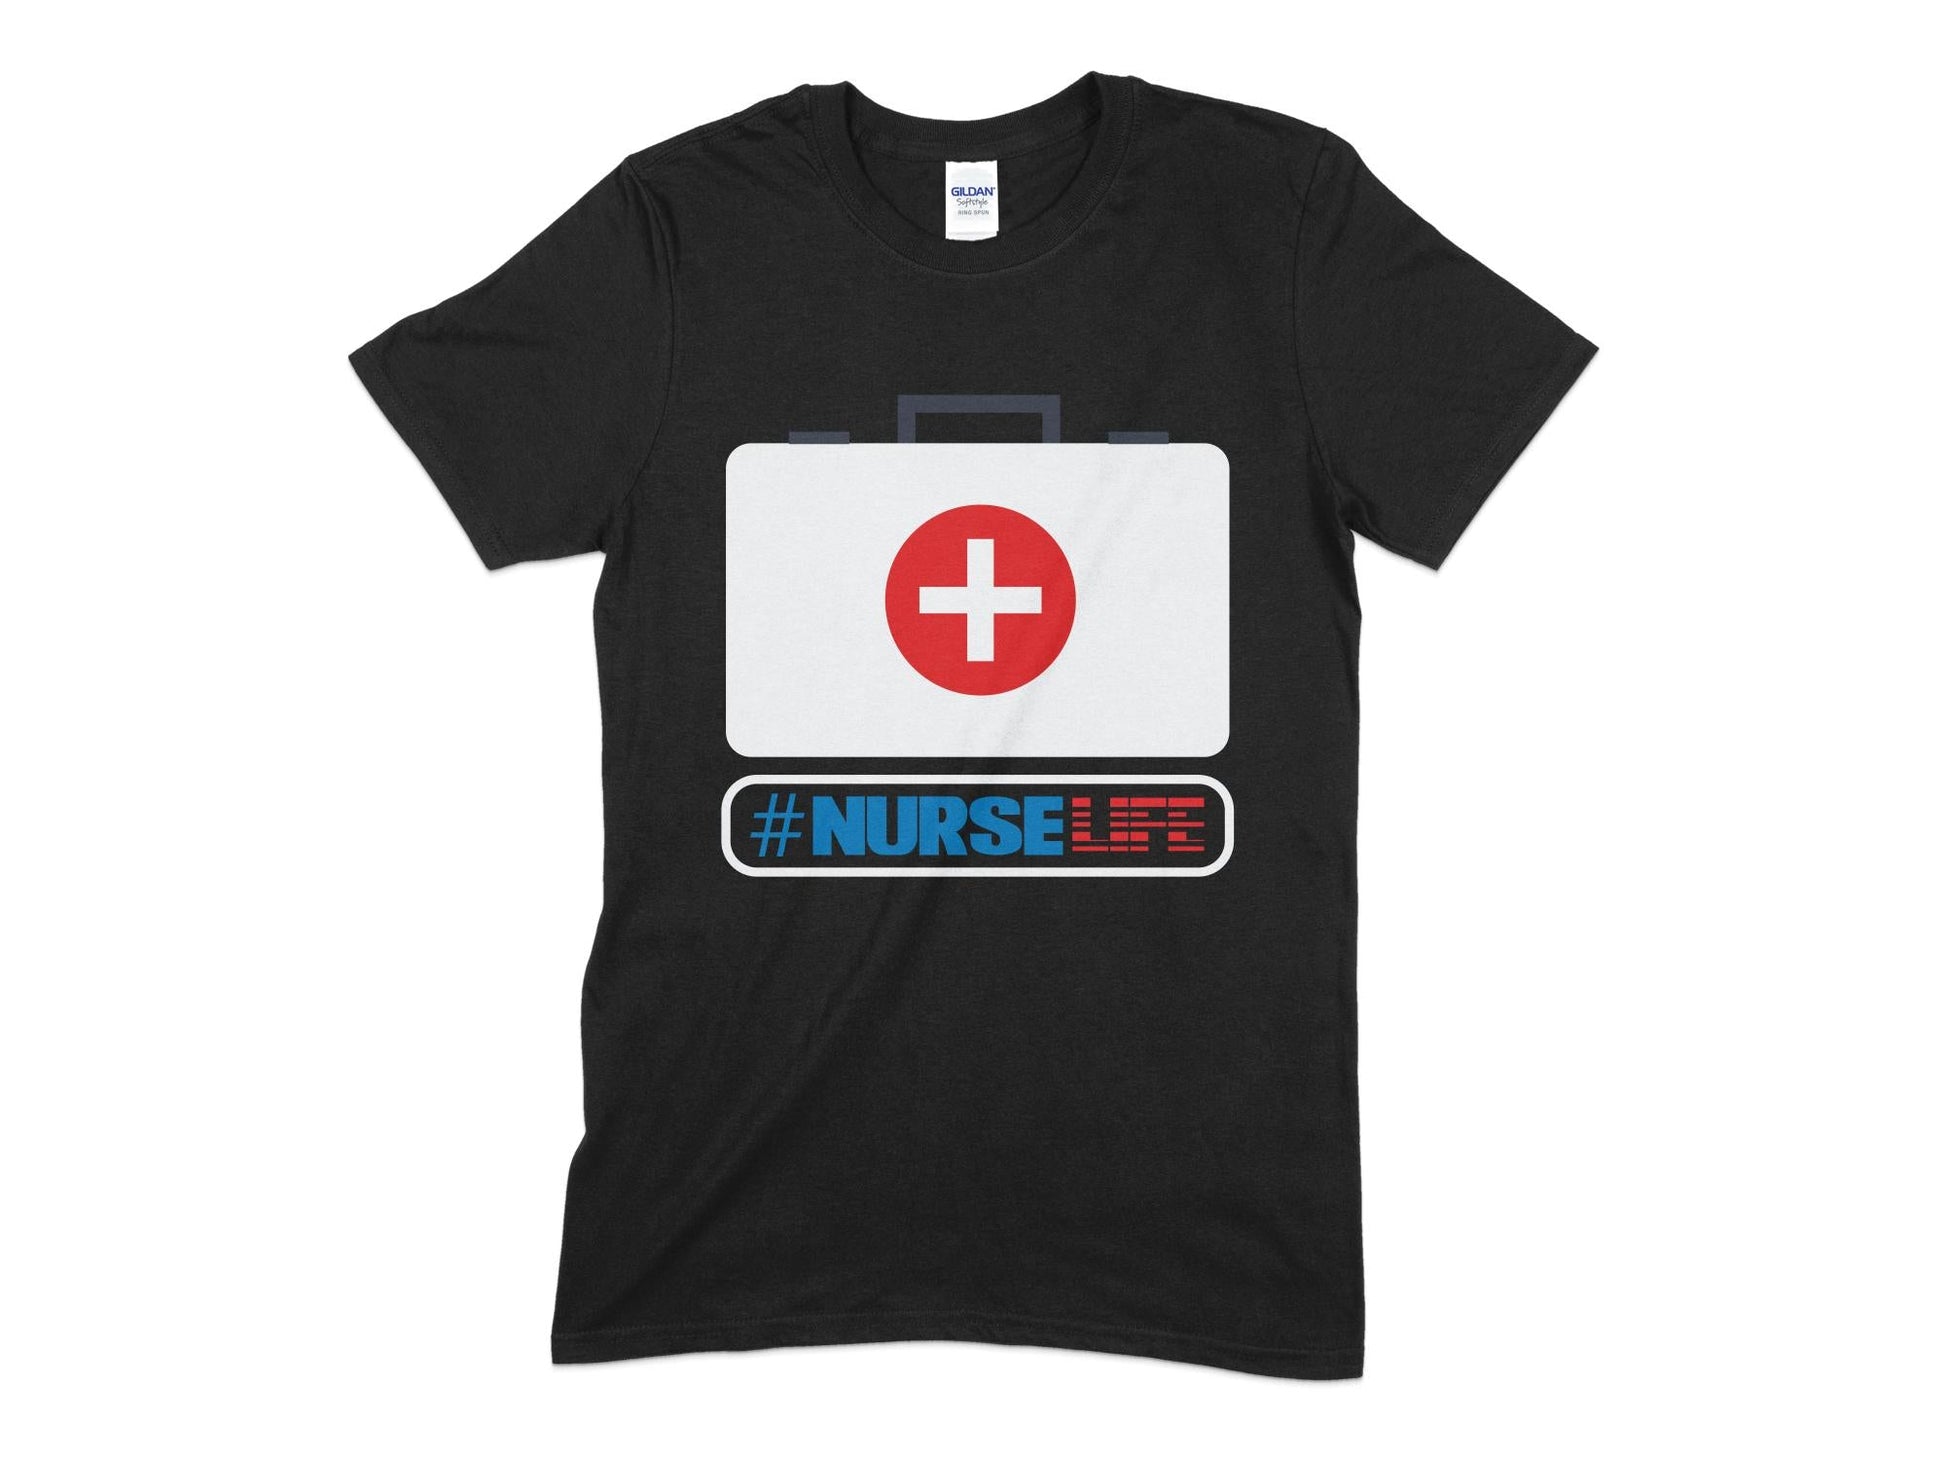 Hashtag nurse life job title unisex t-shirt - Premium t-shirt from MyDesigns - Just $19.95! Shop now at Lees Krazy Teez